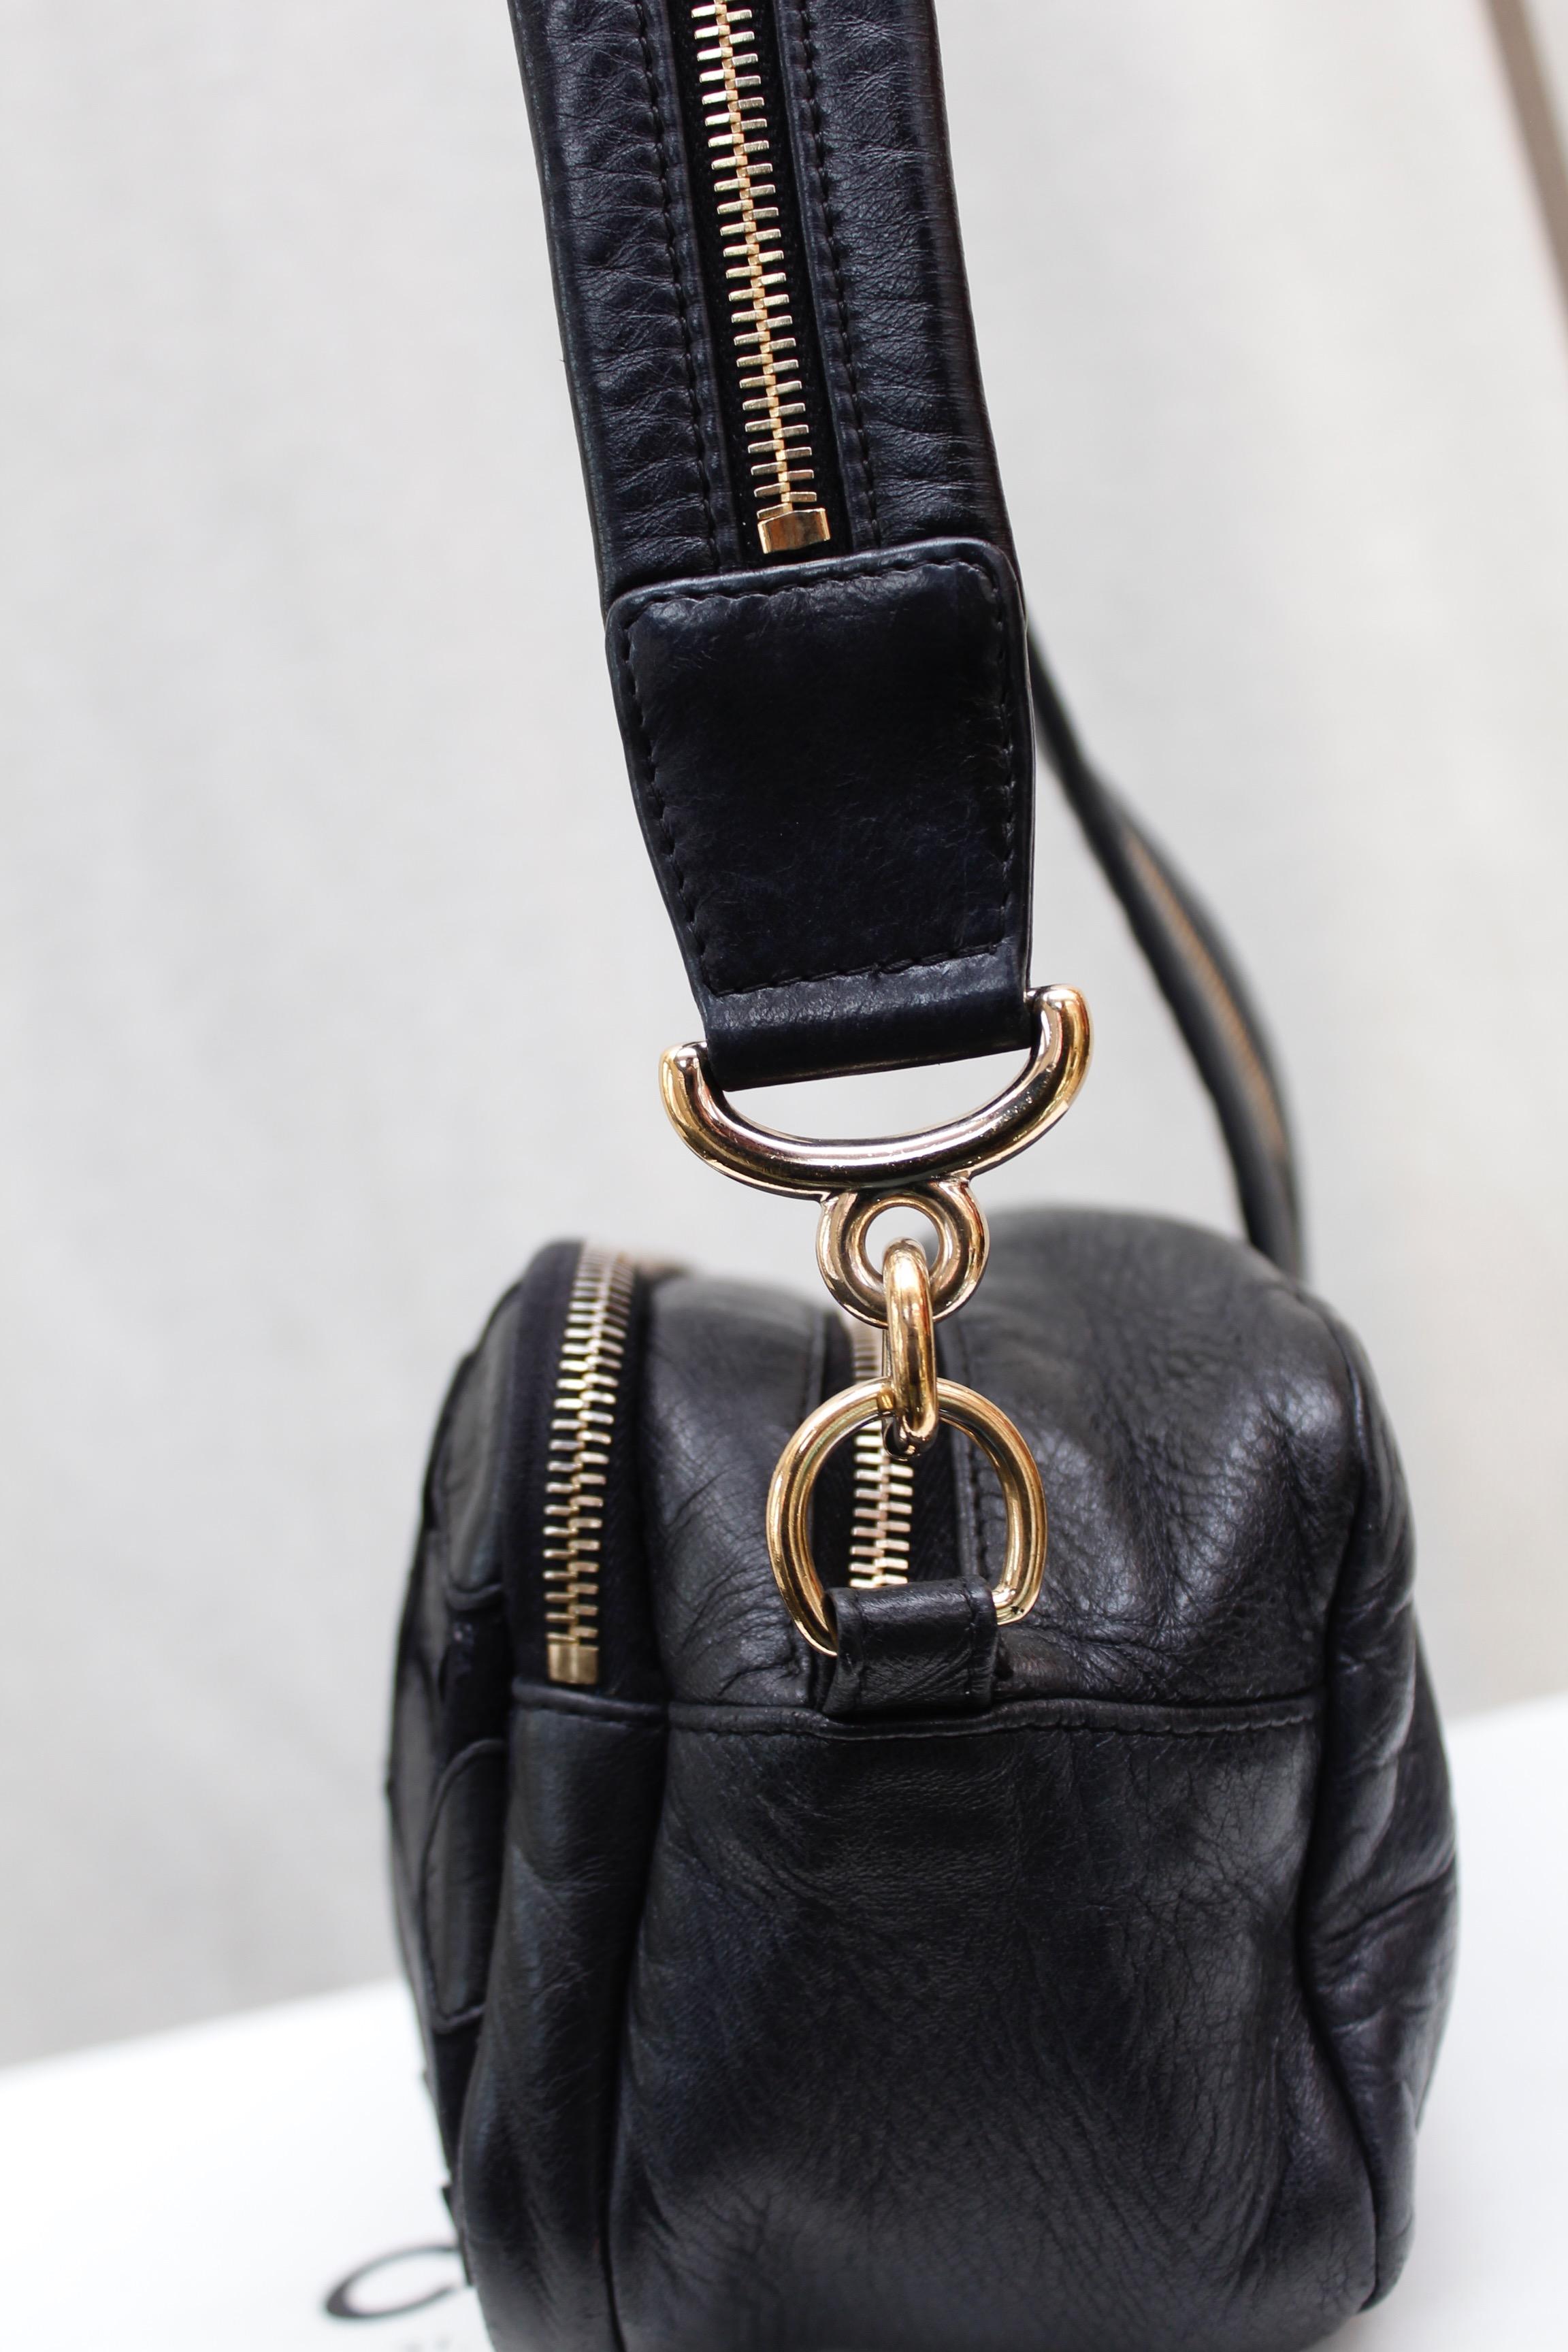 Chanel black leather cross-body bag, 2000’s 2